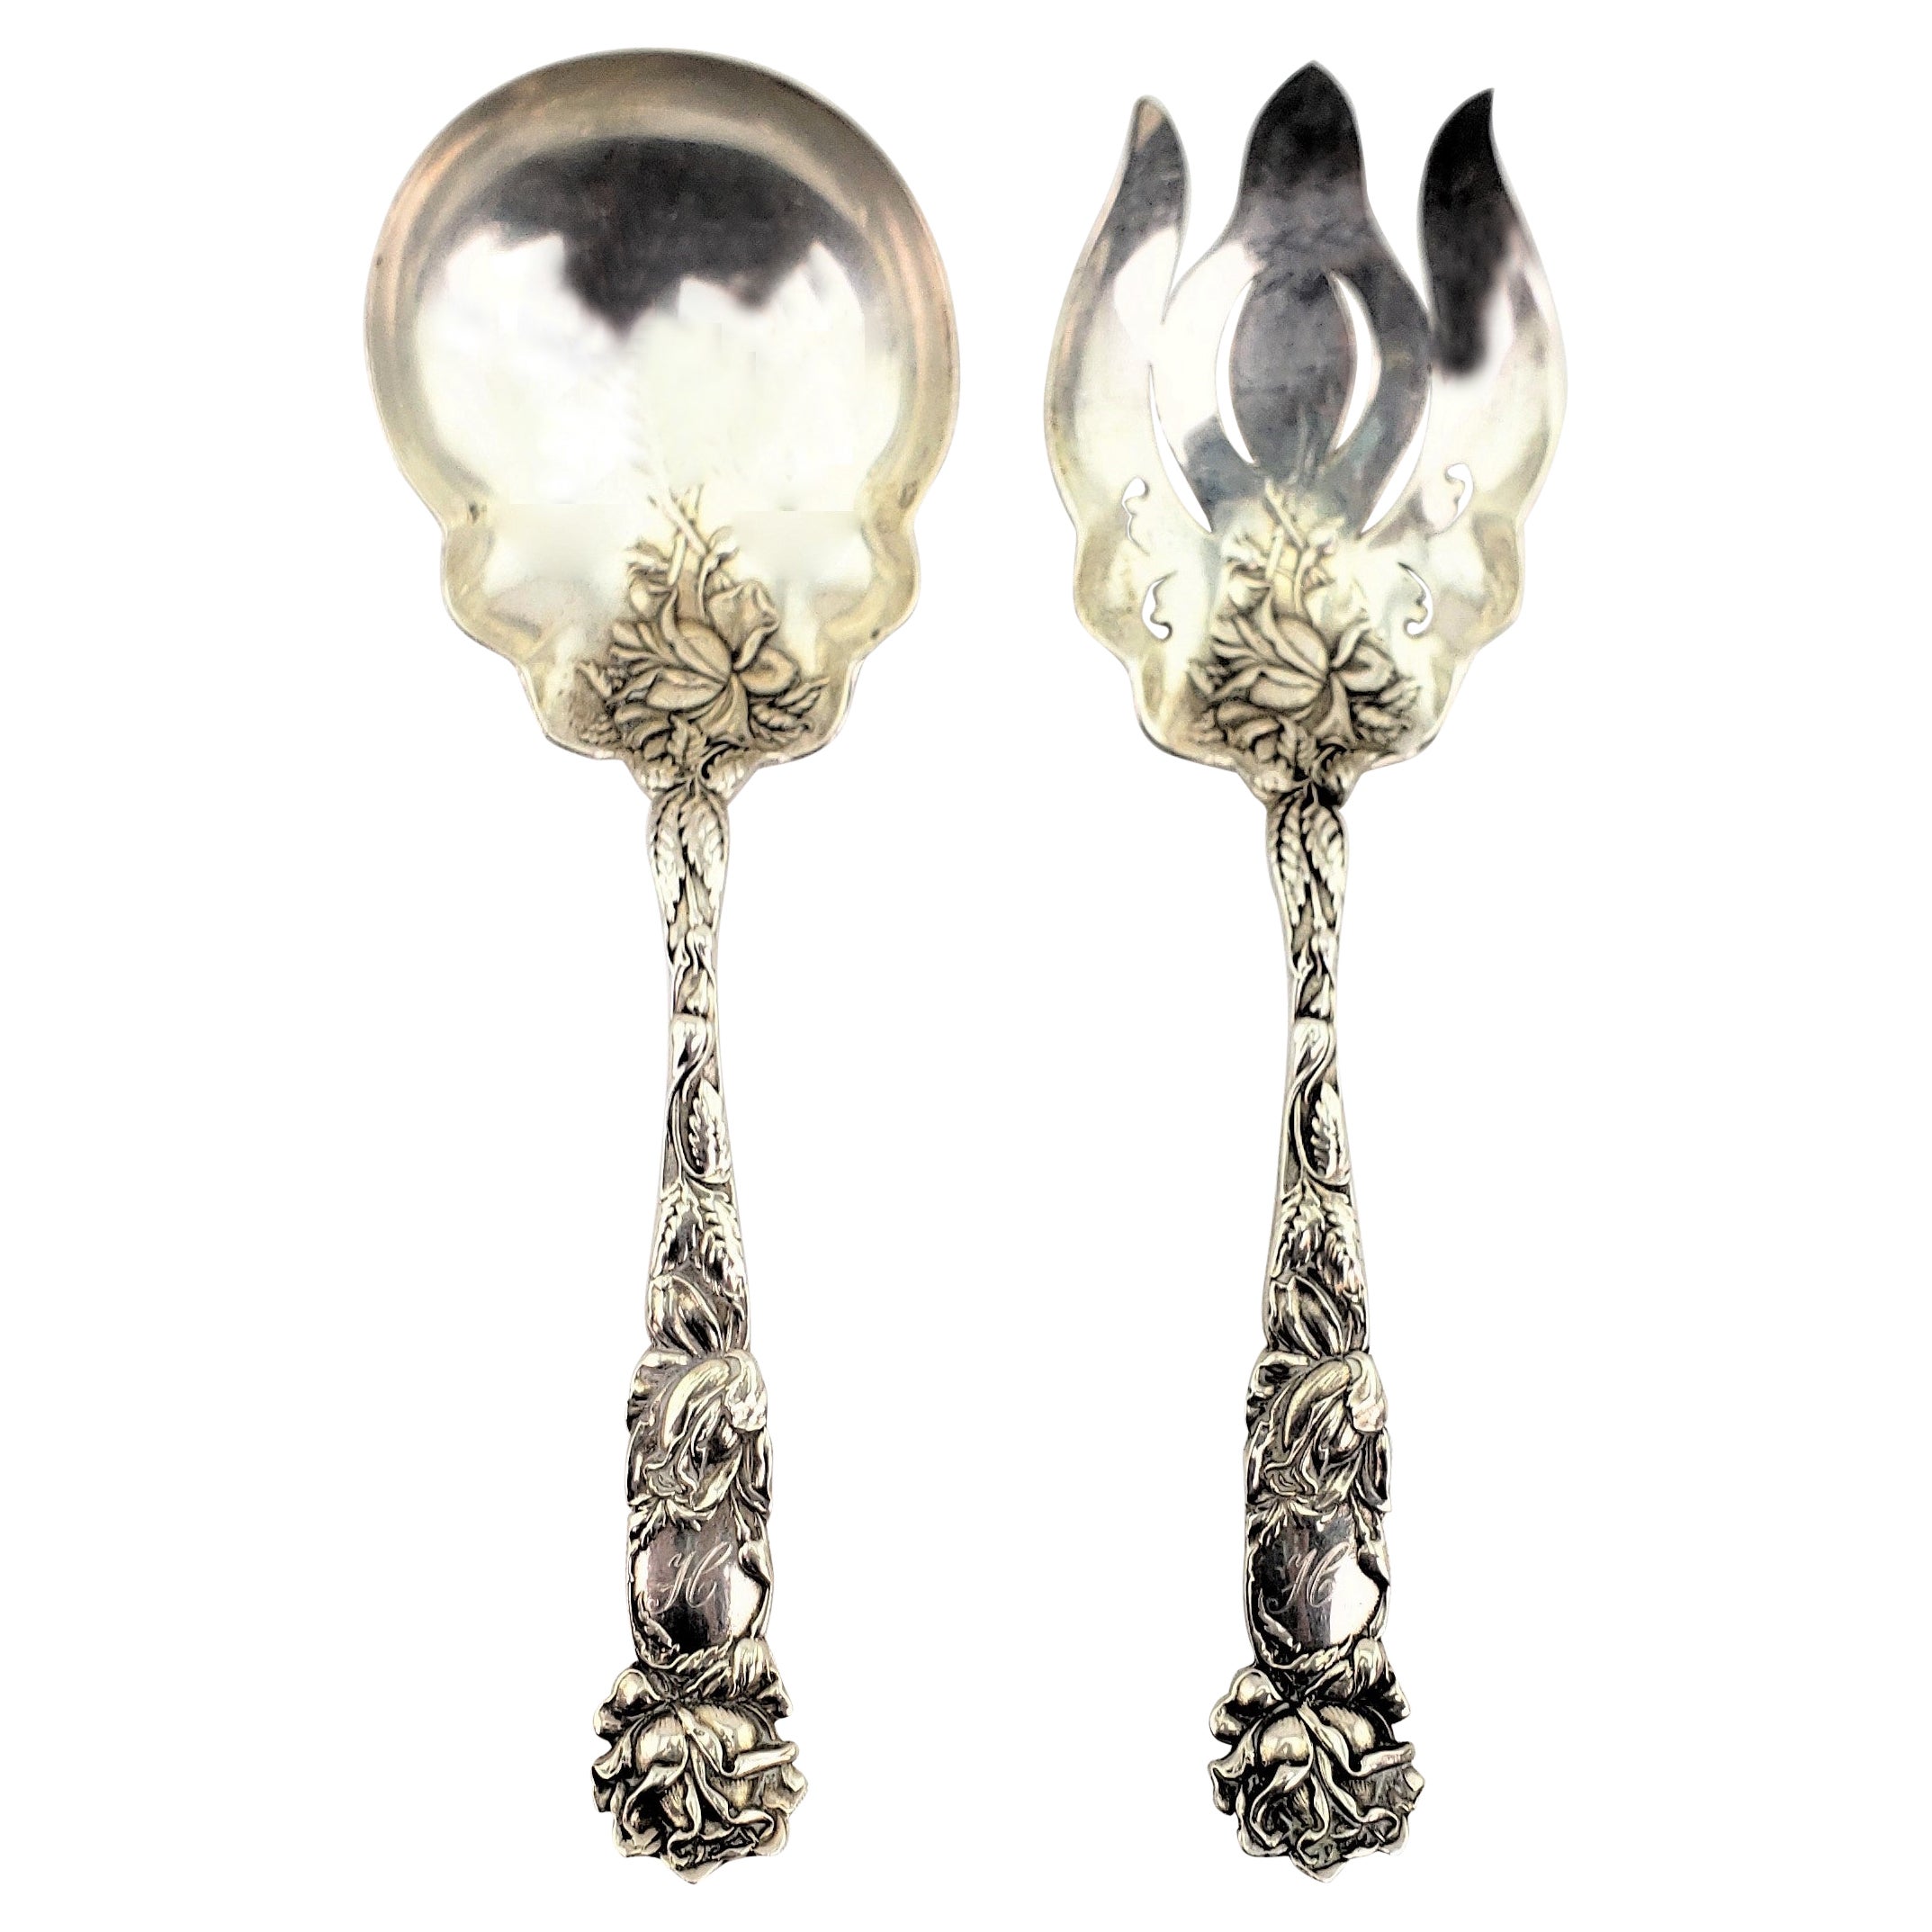 Antique American Art Nouveau Sterling Silver Serving Spoon Set with Floral Motif